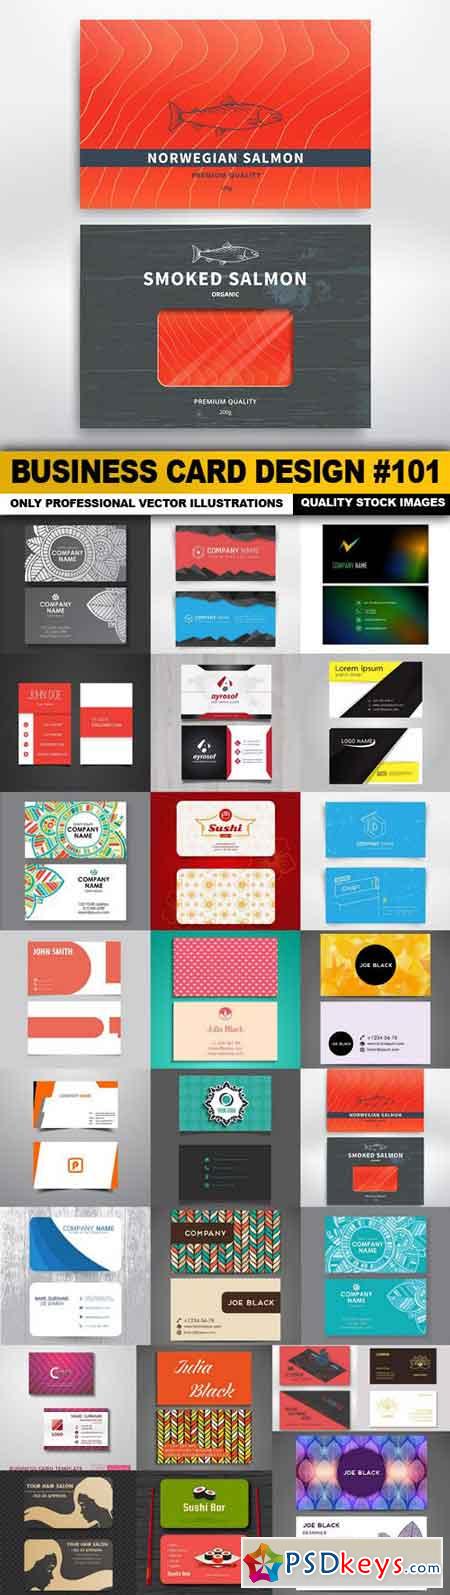 Business Card Design #101 - 25 Vector